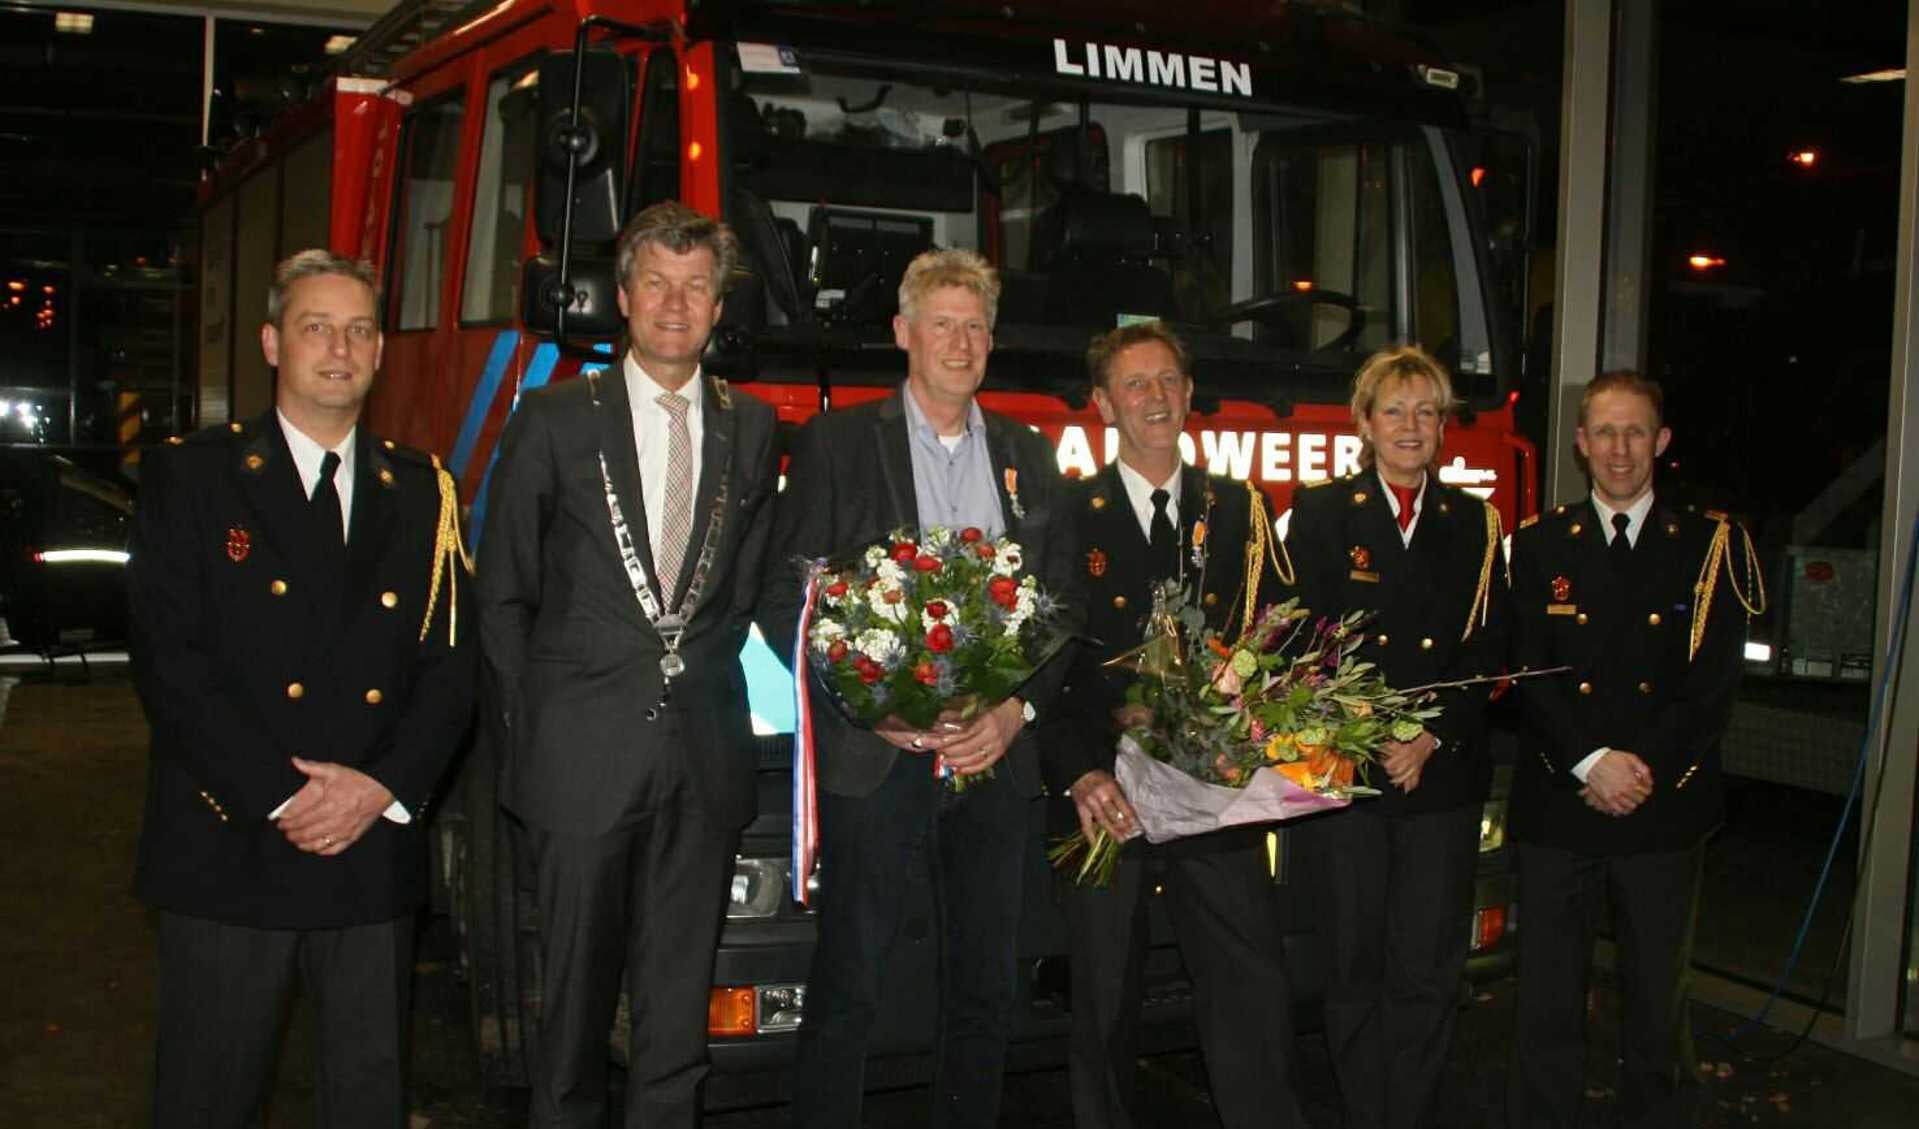 Op de foto vlnr.

Postcommandant Mark Schuitema, burgemeester Mans, Pieter Admiraal, Paul Bos, teamleider Petra Abma en teamleider Hakan Meijer.